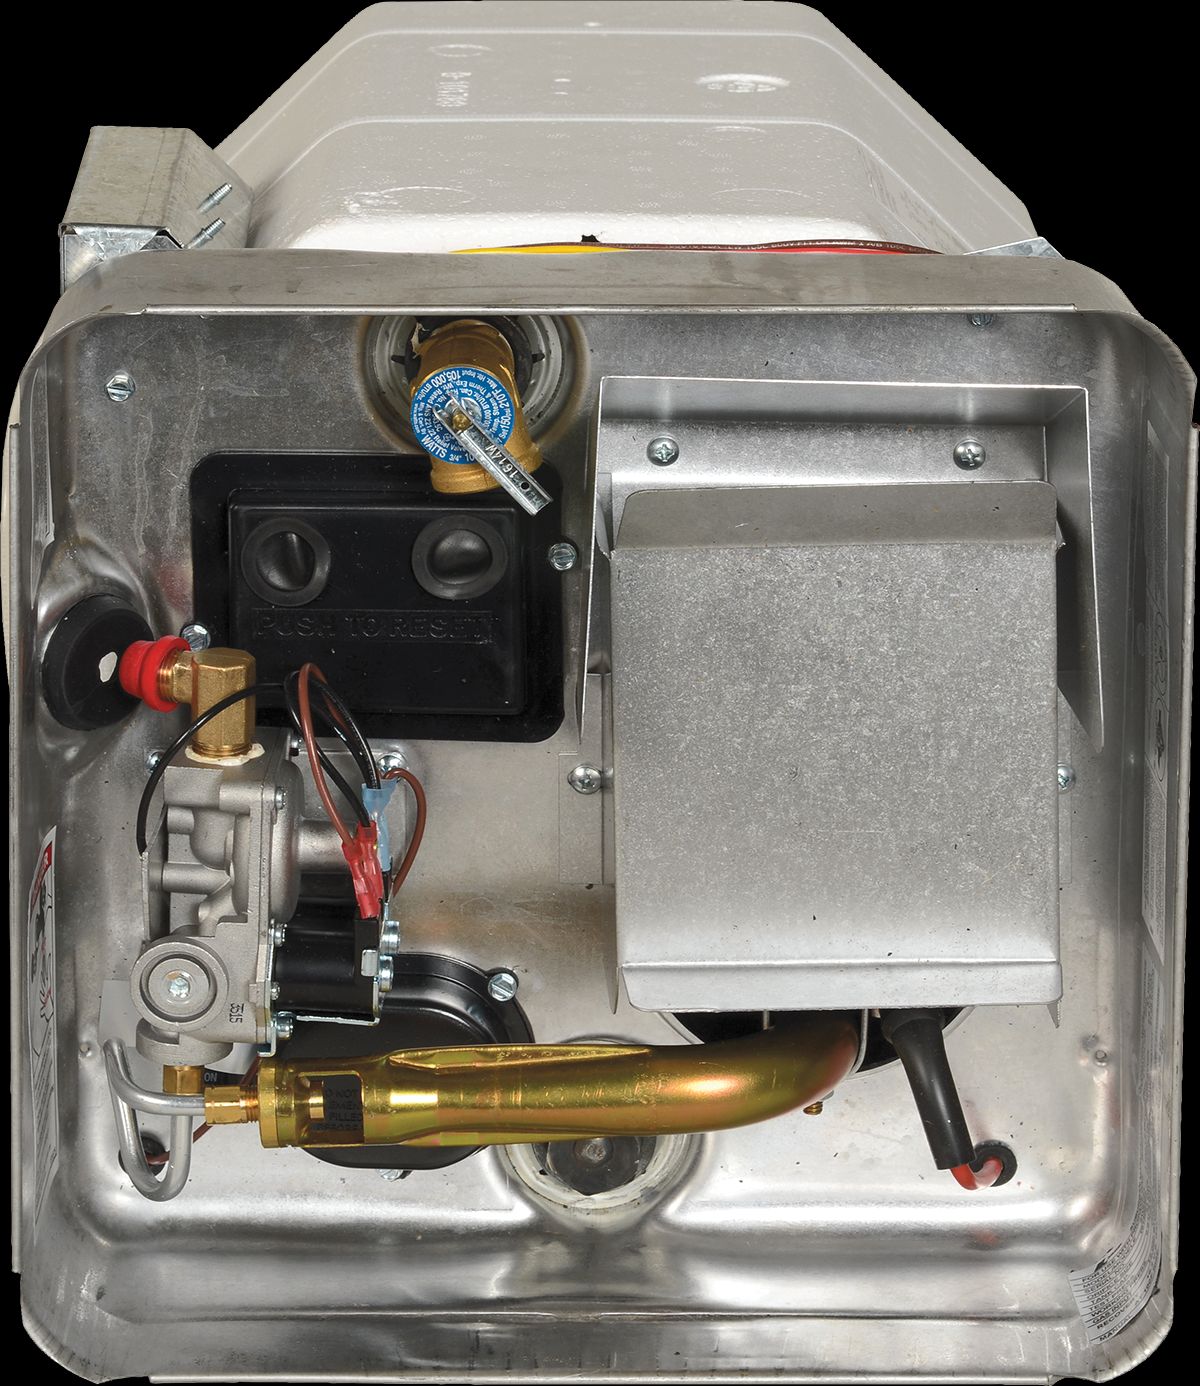 Suburban Gas-Electric Water Heater Model Number SW10DE 5243A - S6U5243A